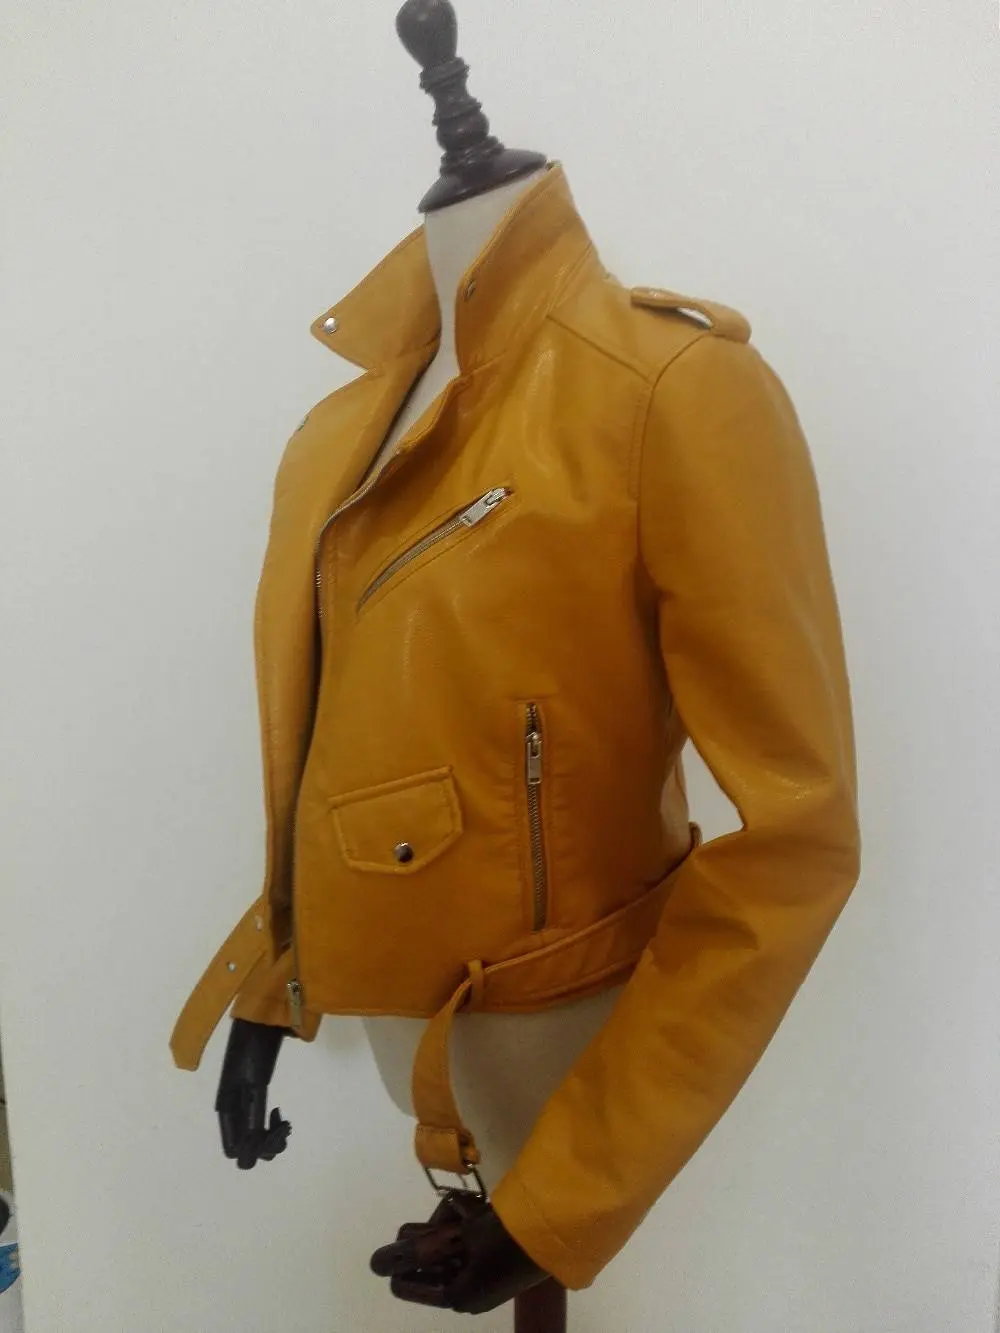 Motorcycle Slim PU Leather Jacket in Coats & Jackets